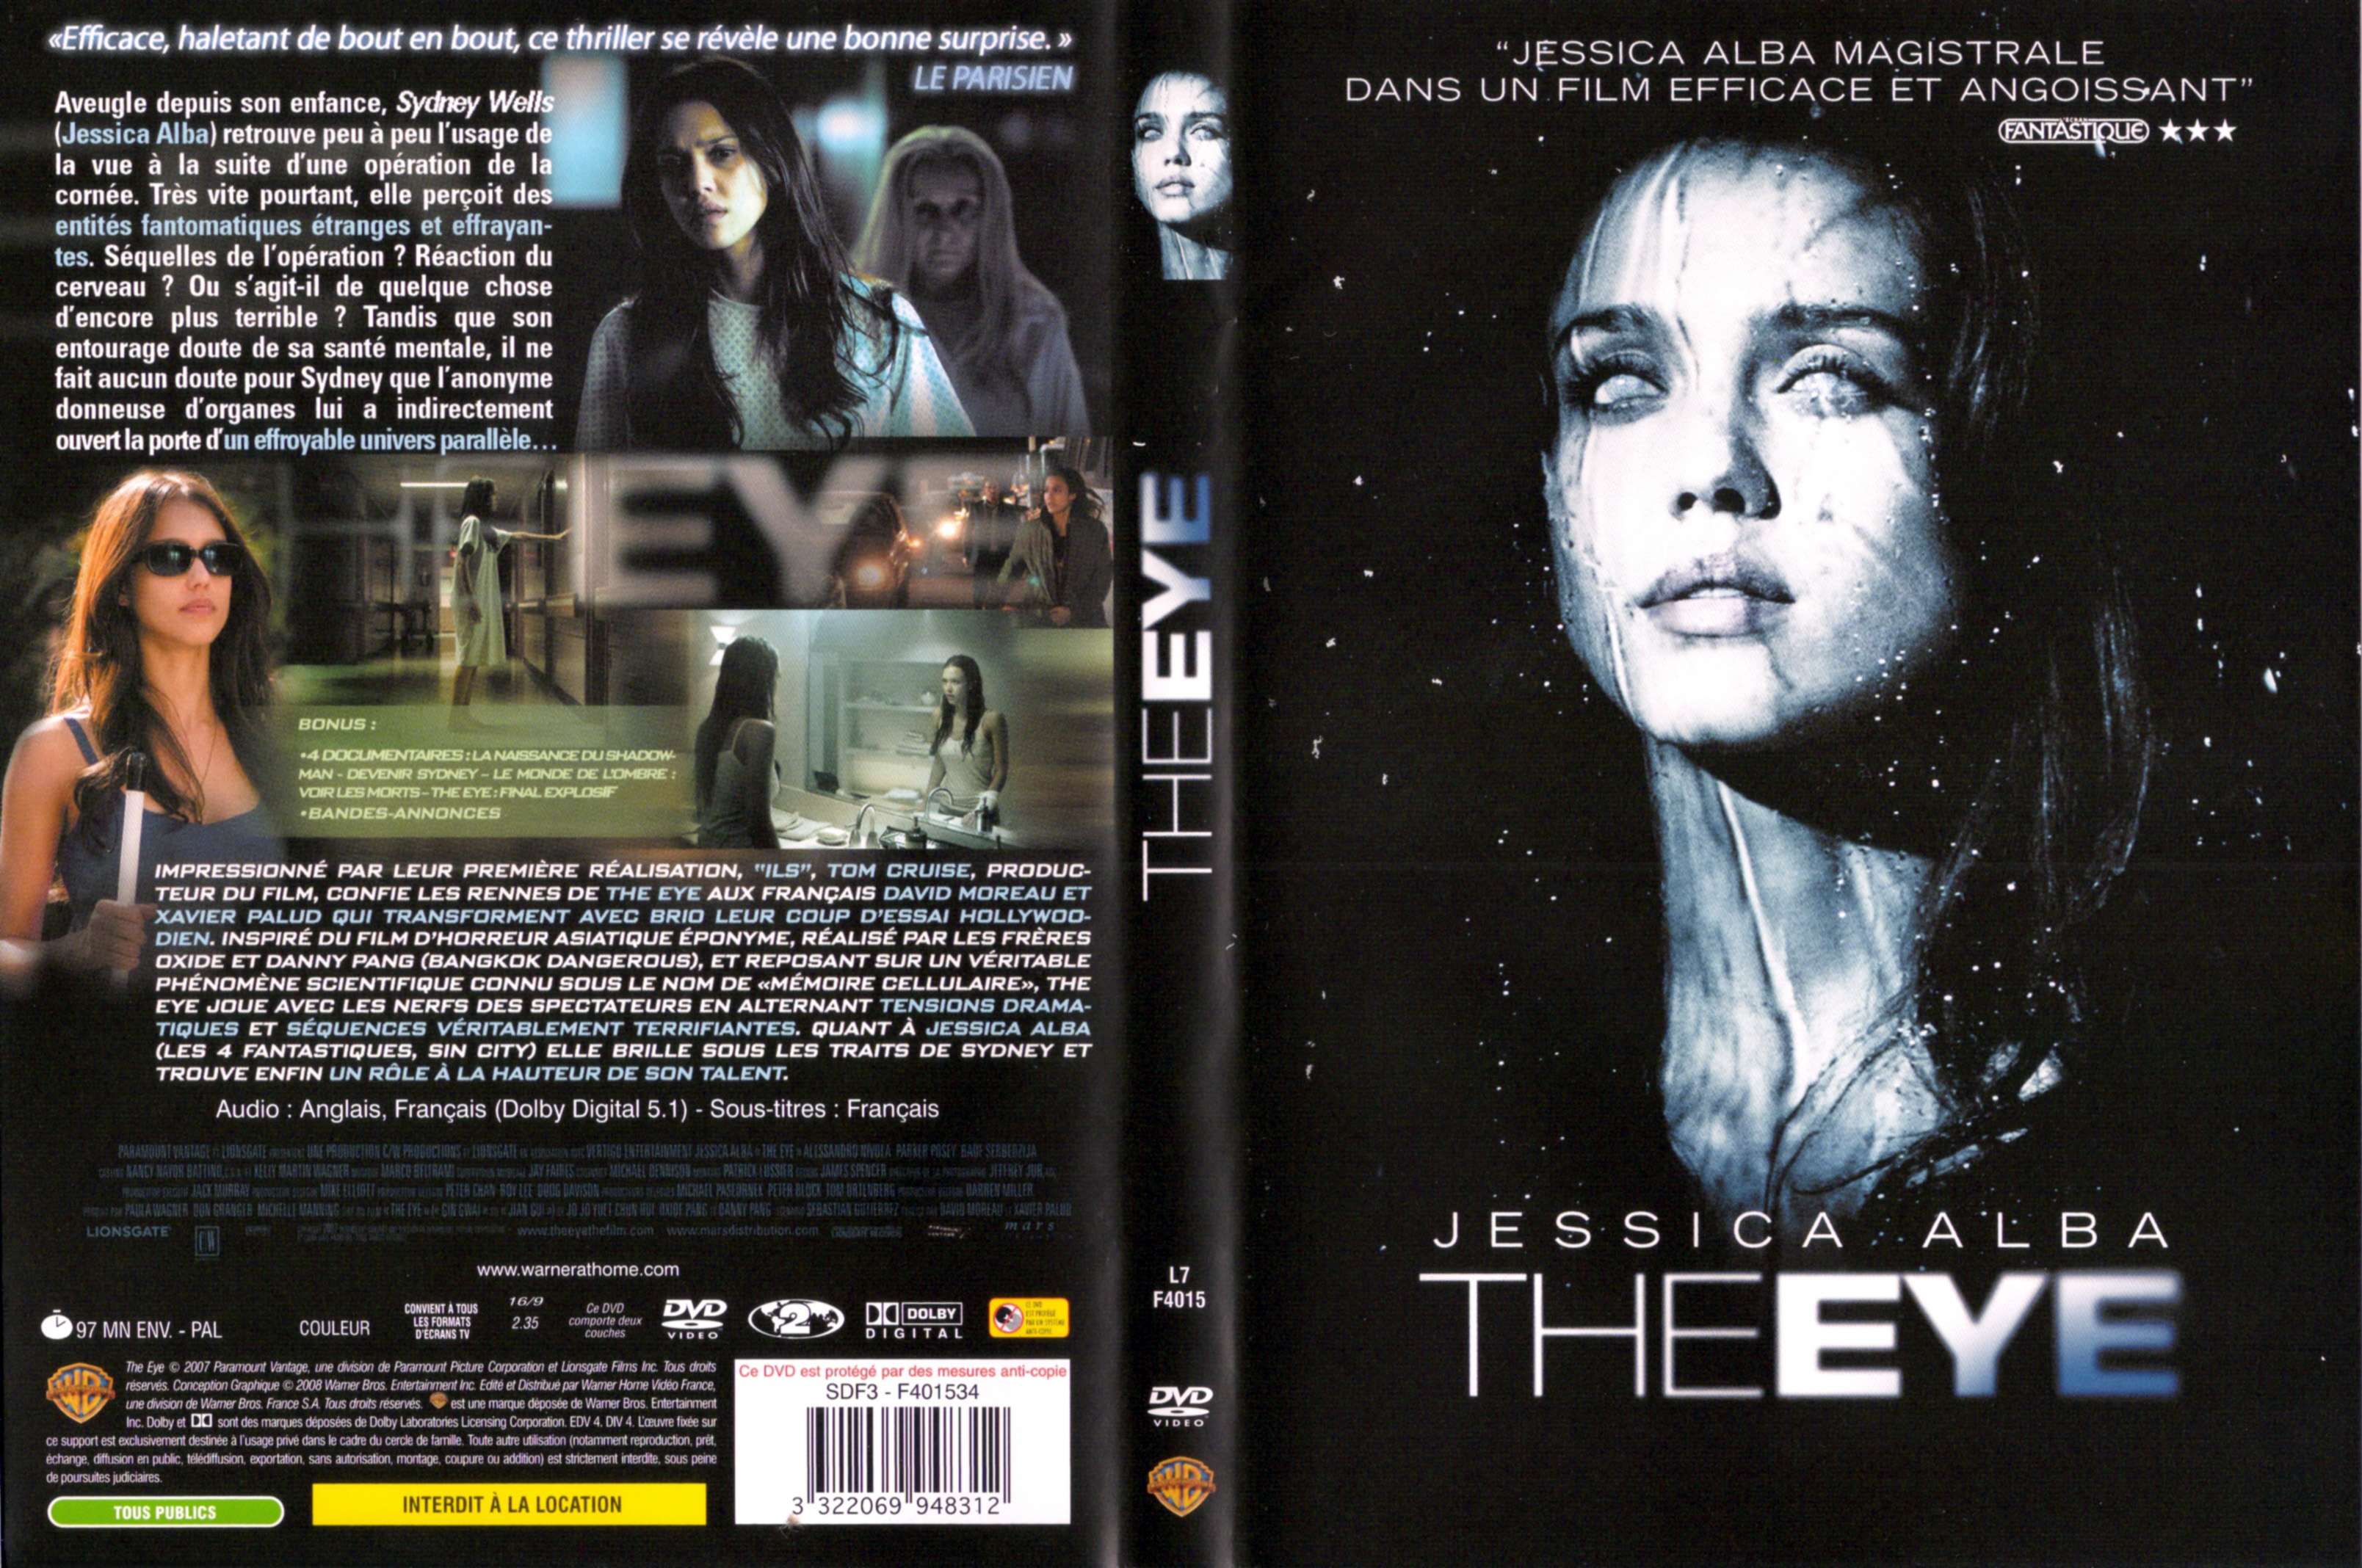 Jaquette DVD The eye (2008) v2